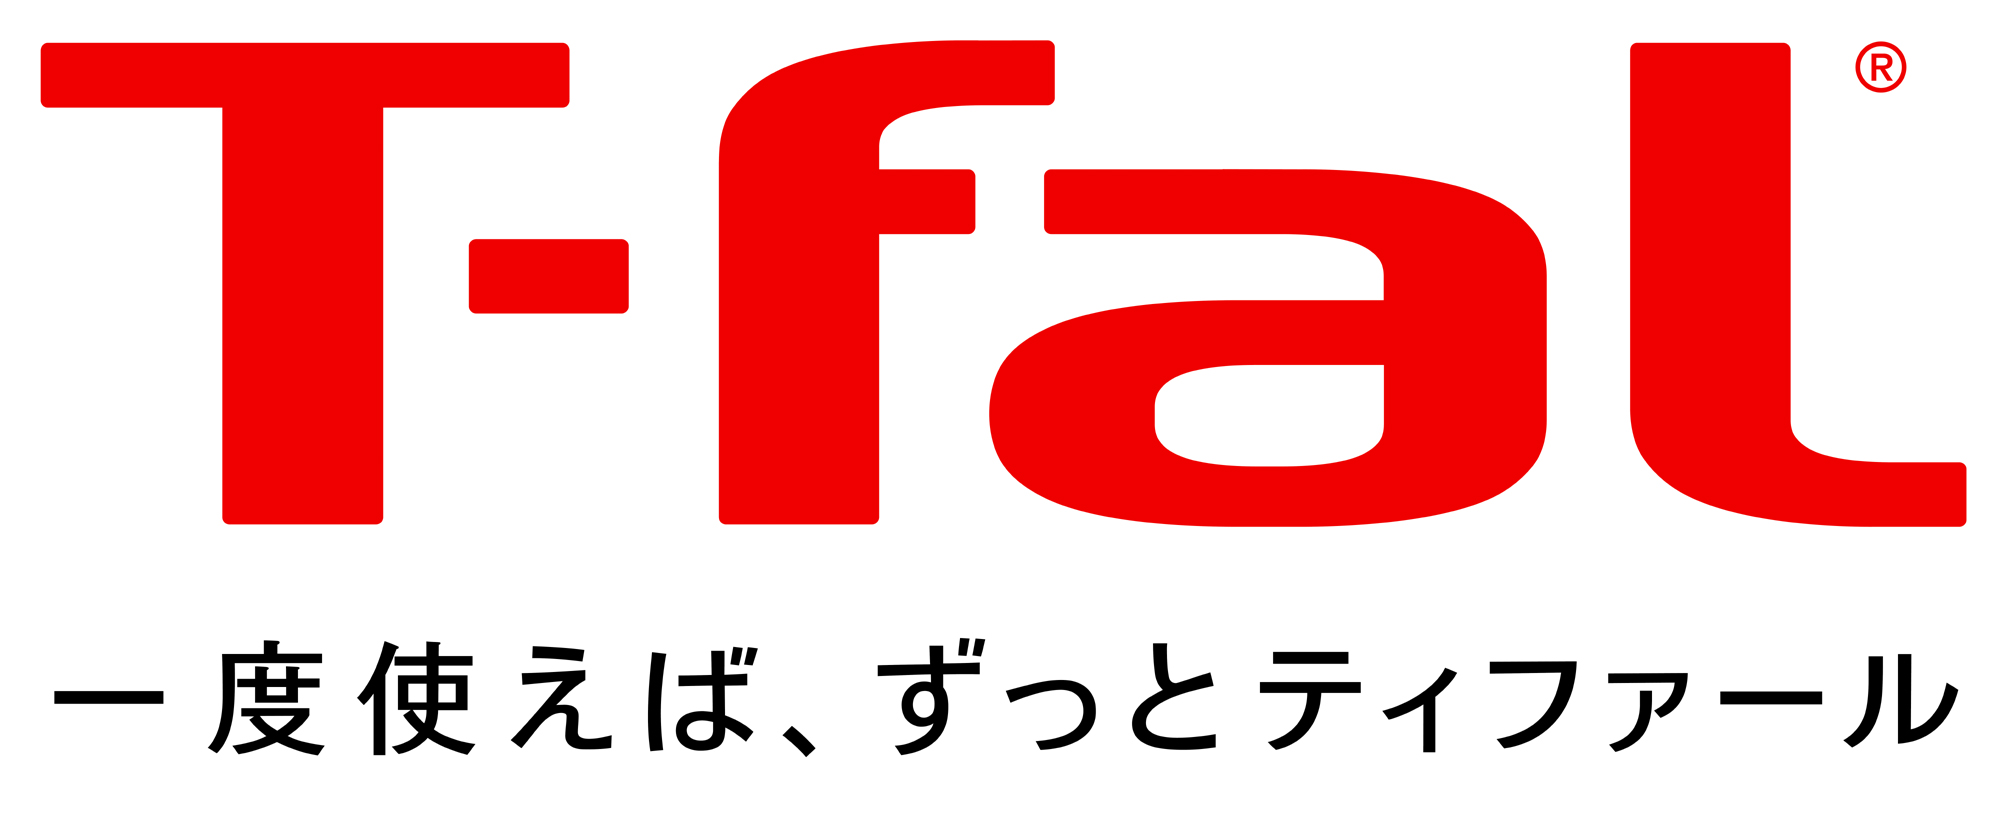 T-fal_logo+strapline.jpg